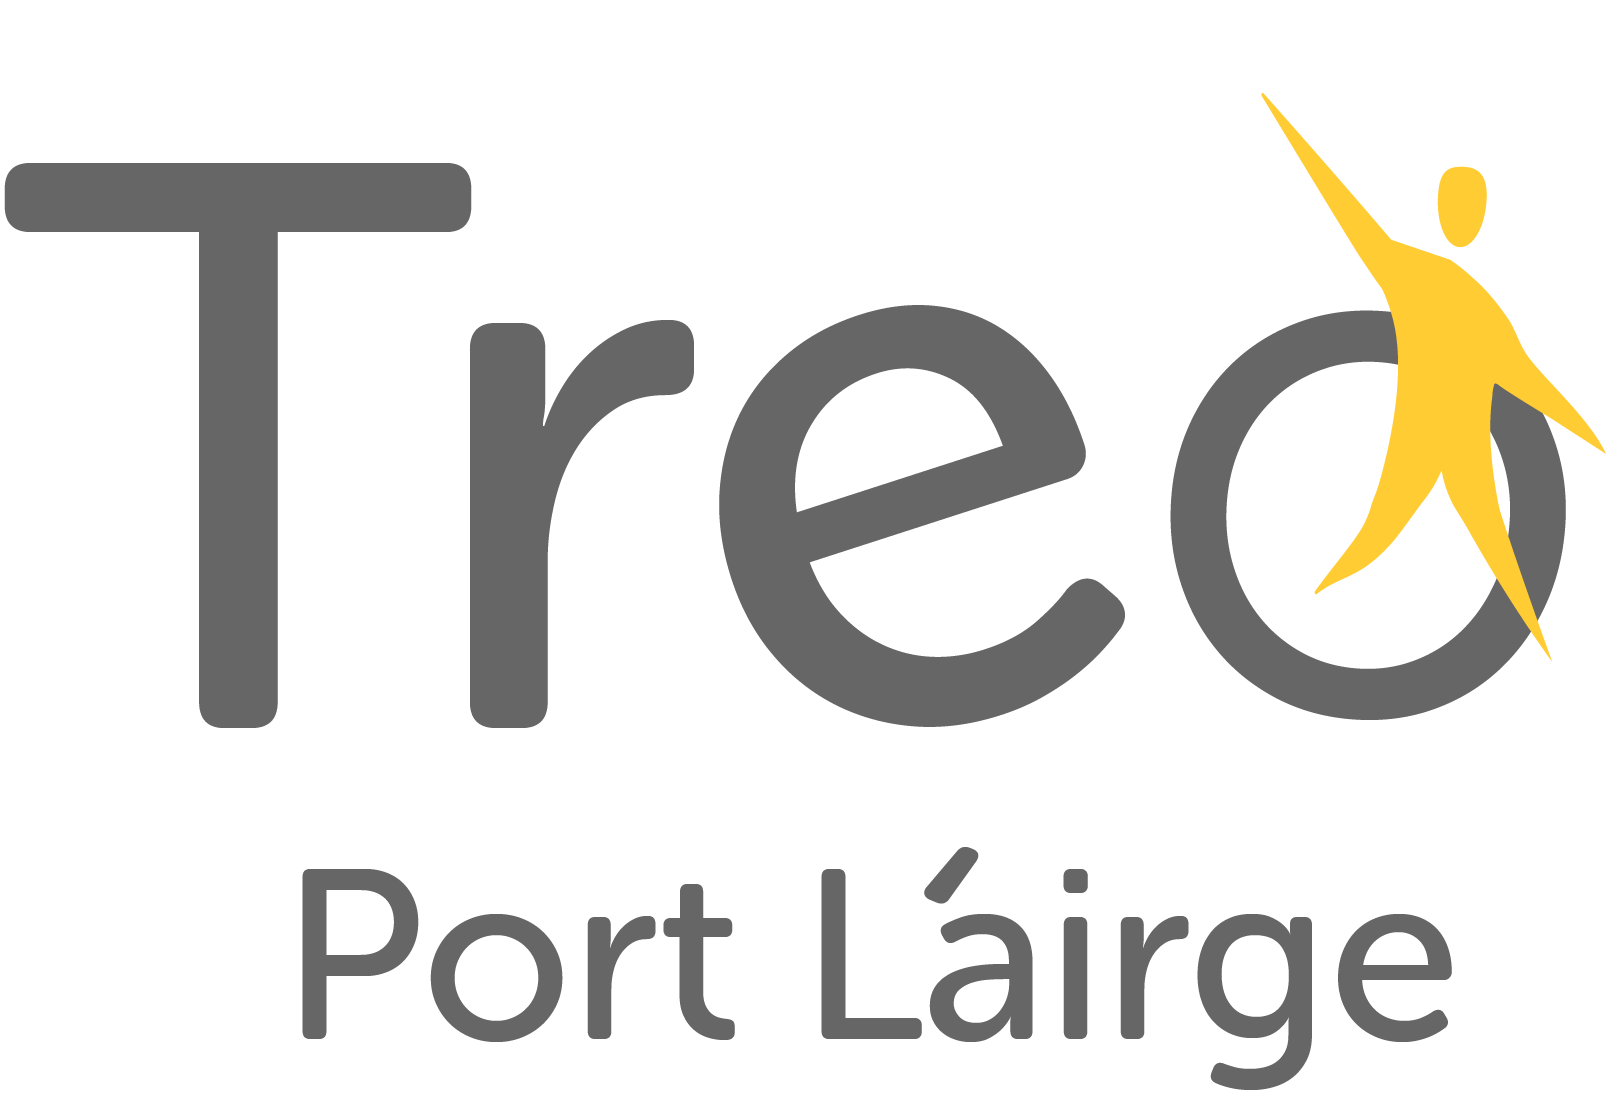 Treo Port Lairge CLG